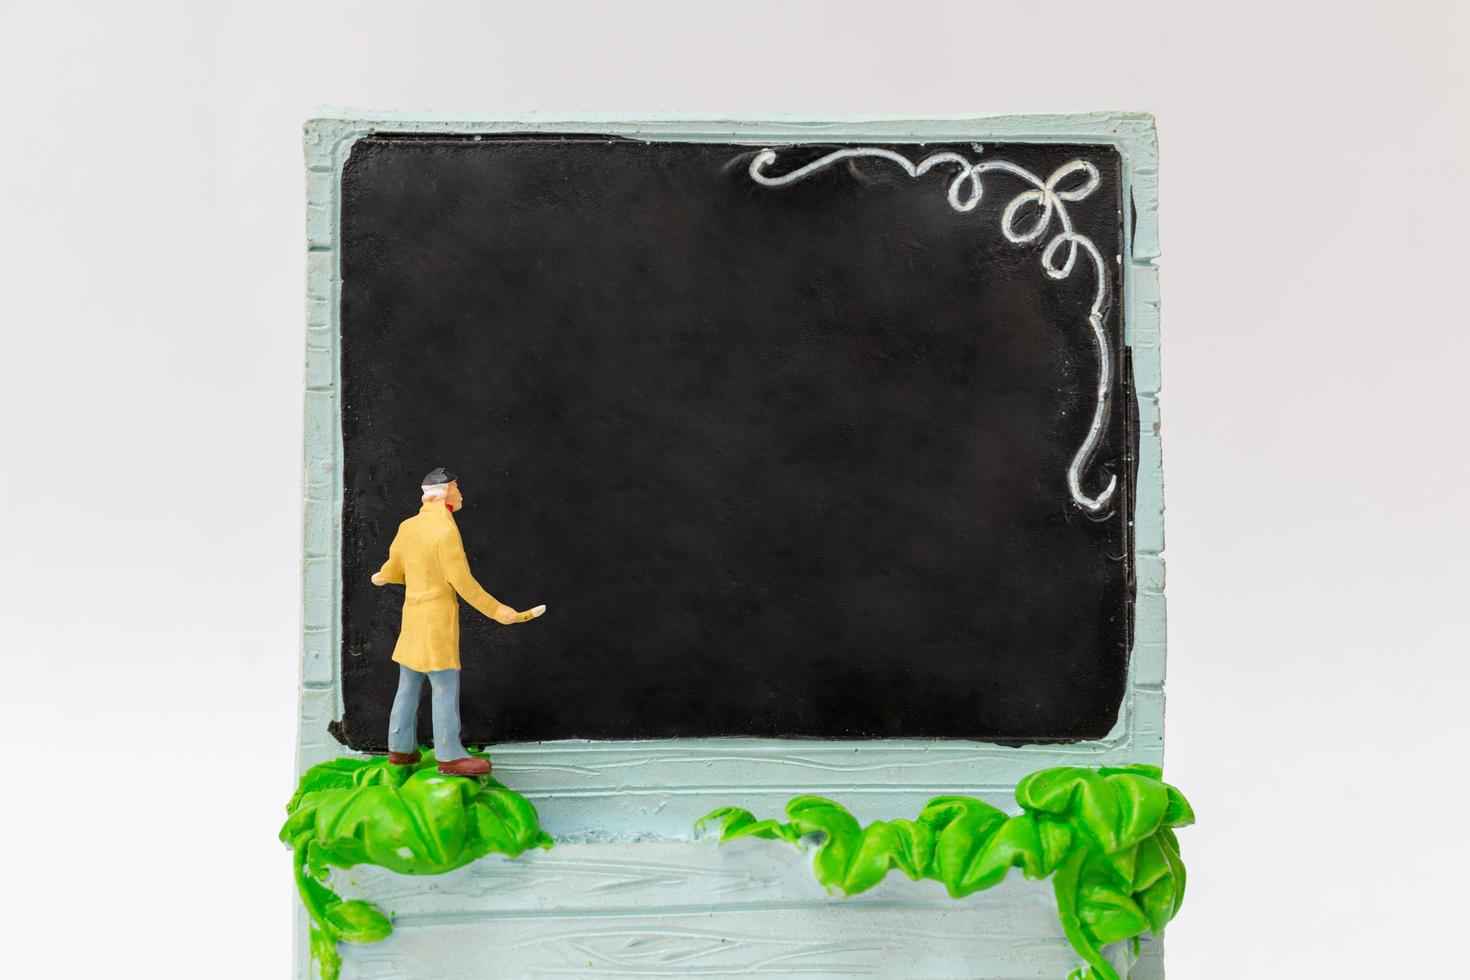 Miniature painter holding a brush on a chalkboard photo